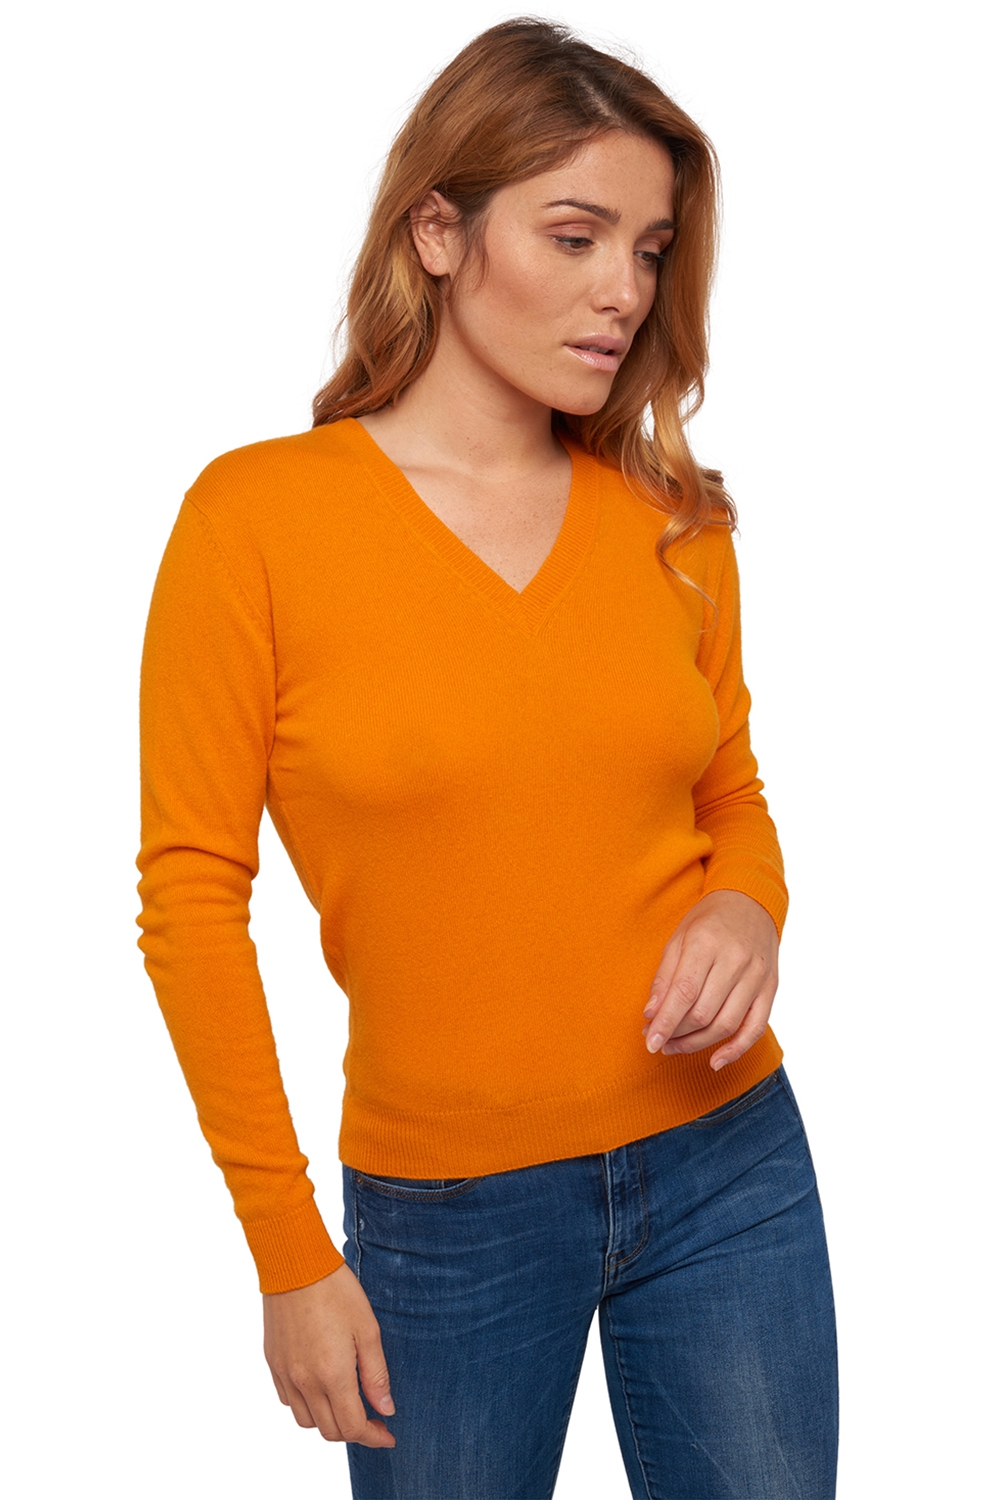 Kasjmier dames kasjmier basic pullovers voor lage prijzen tessa first orange xl